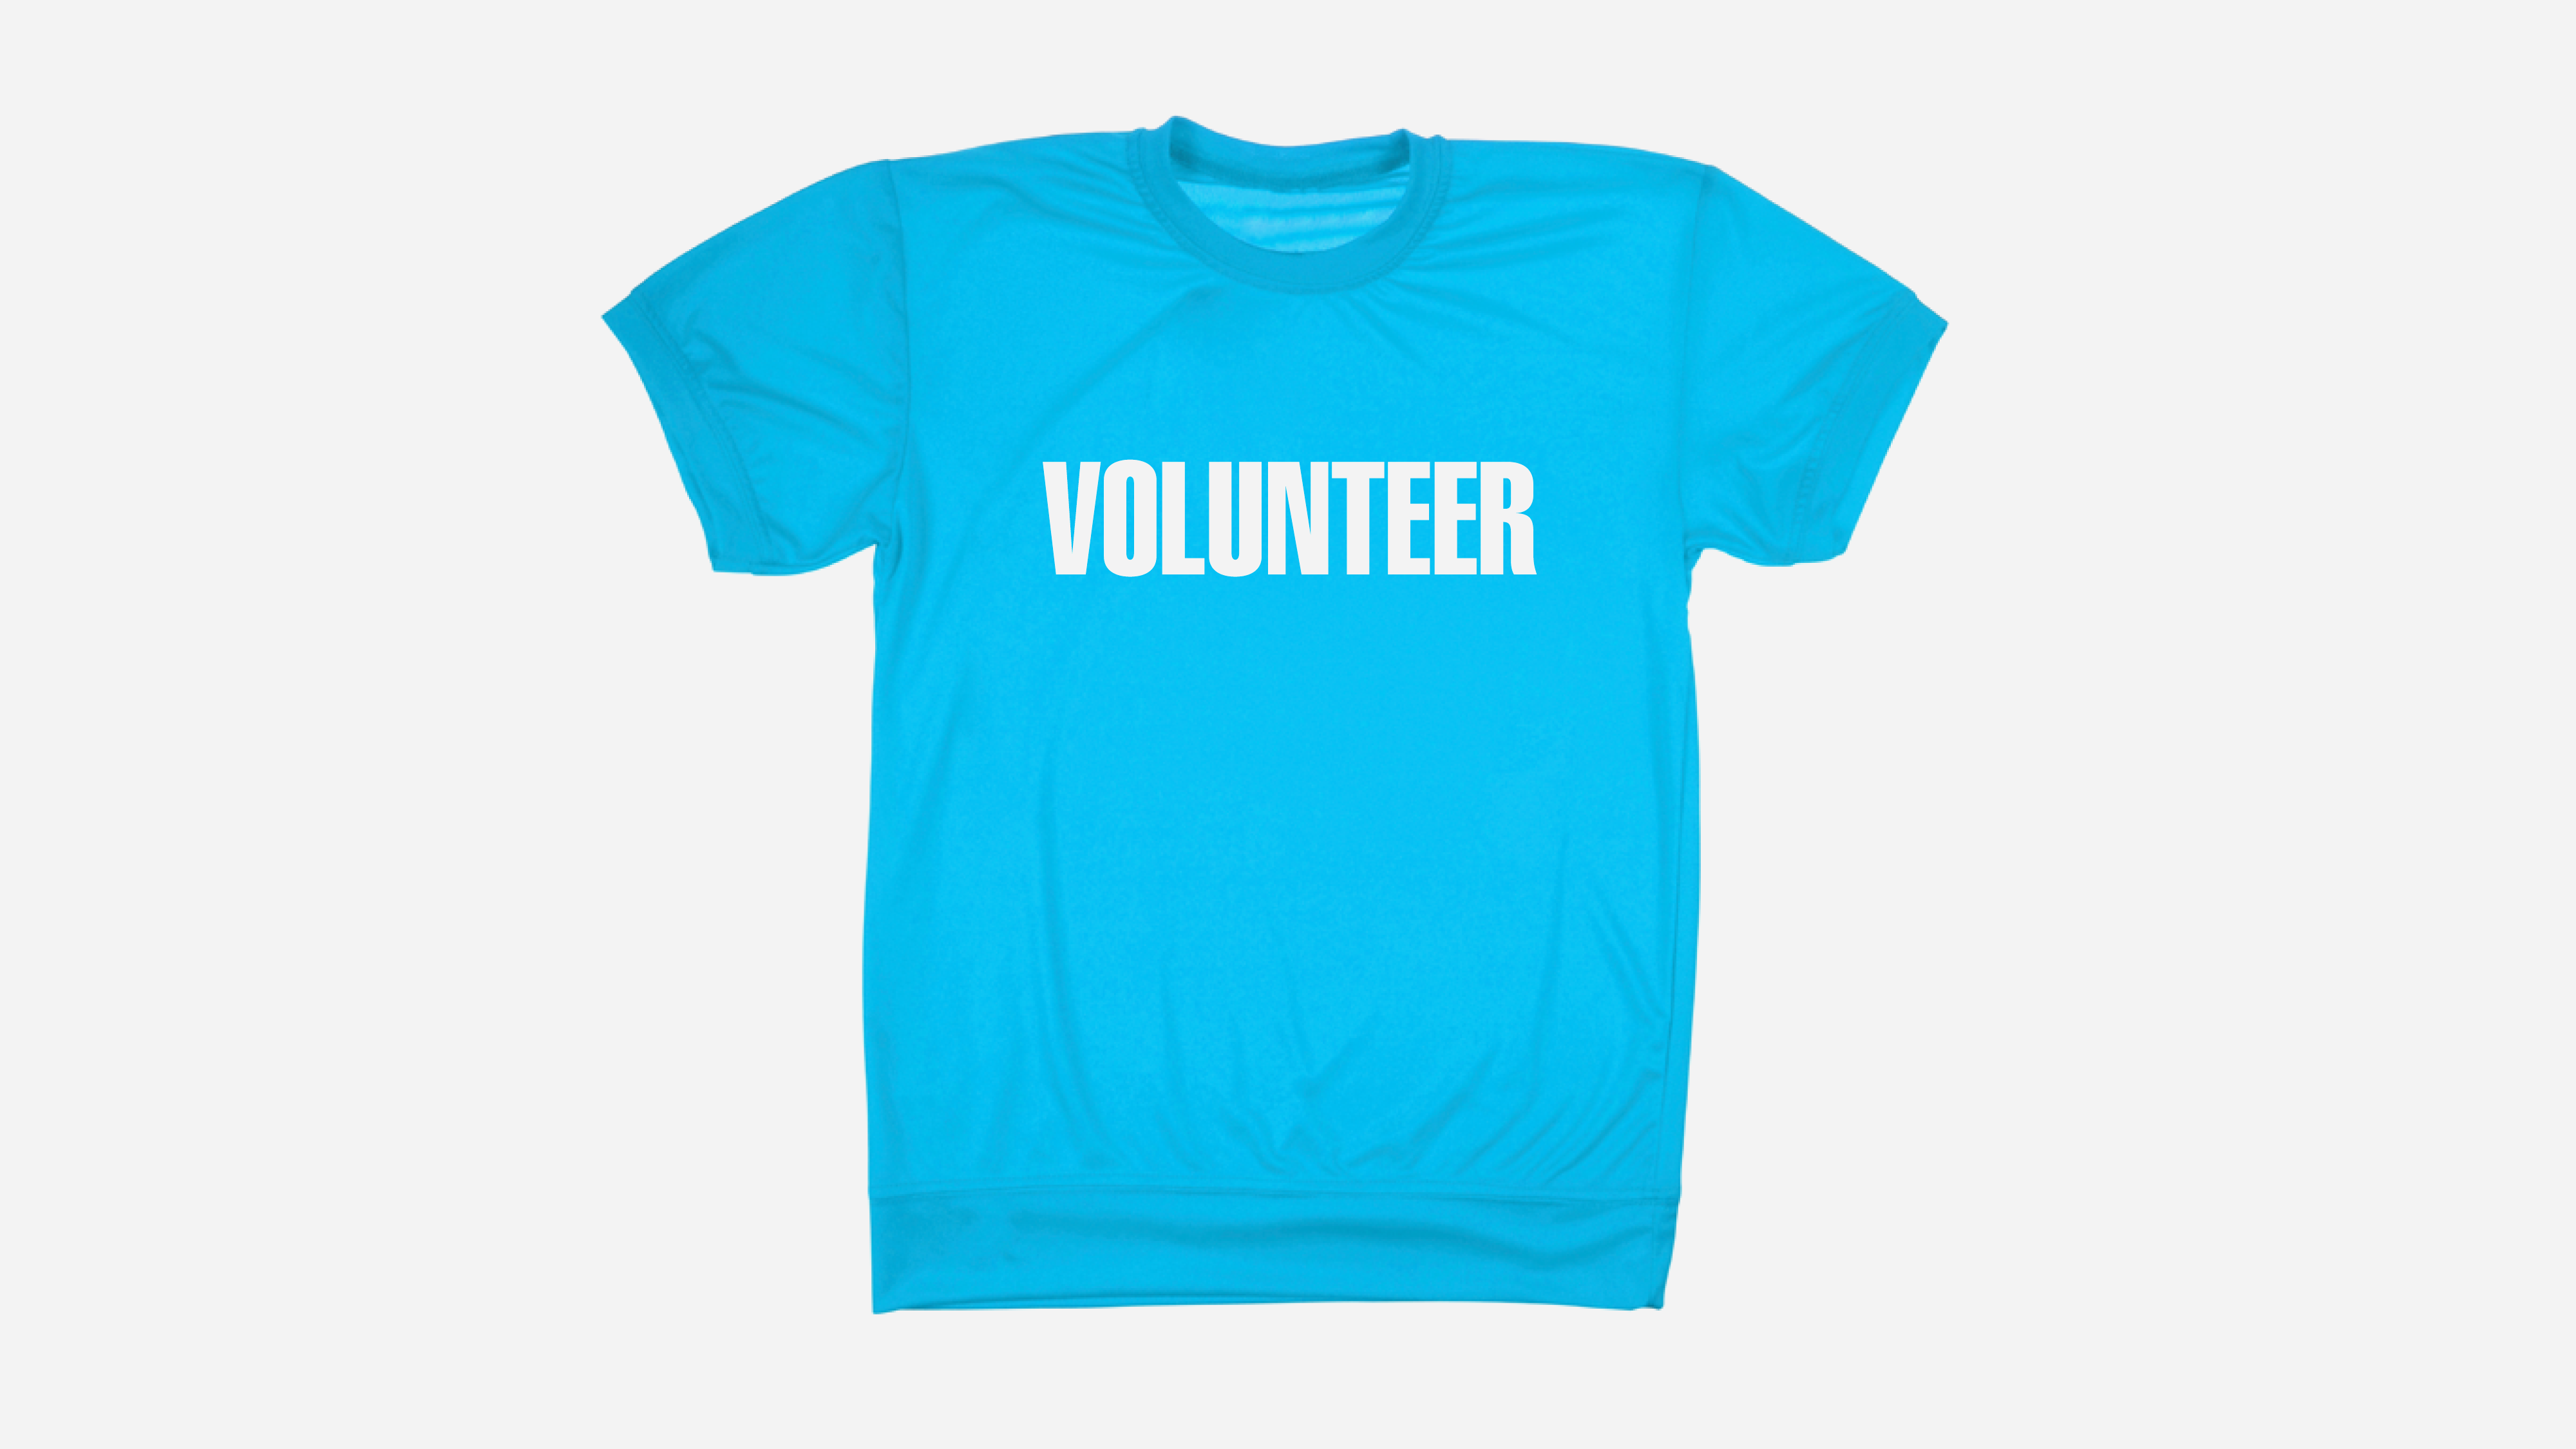 blue volunteer t-shirt